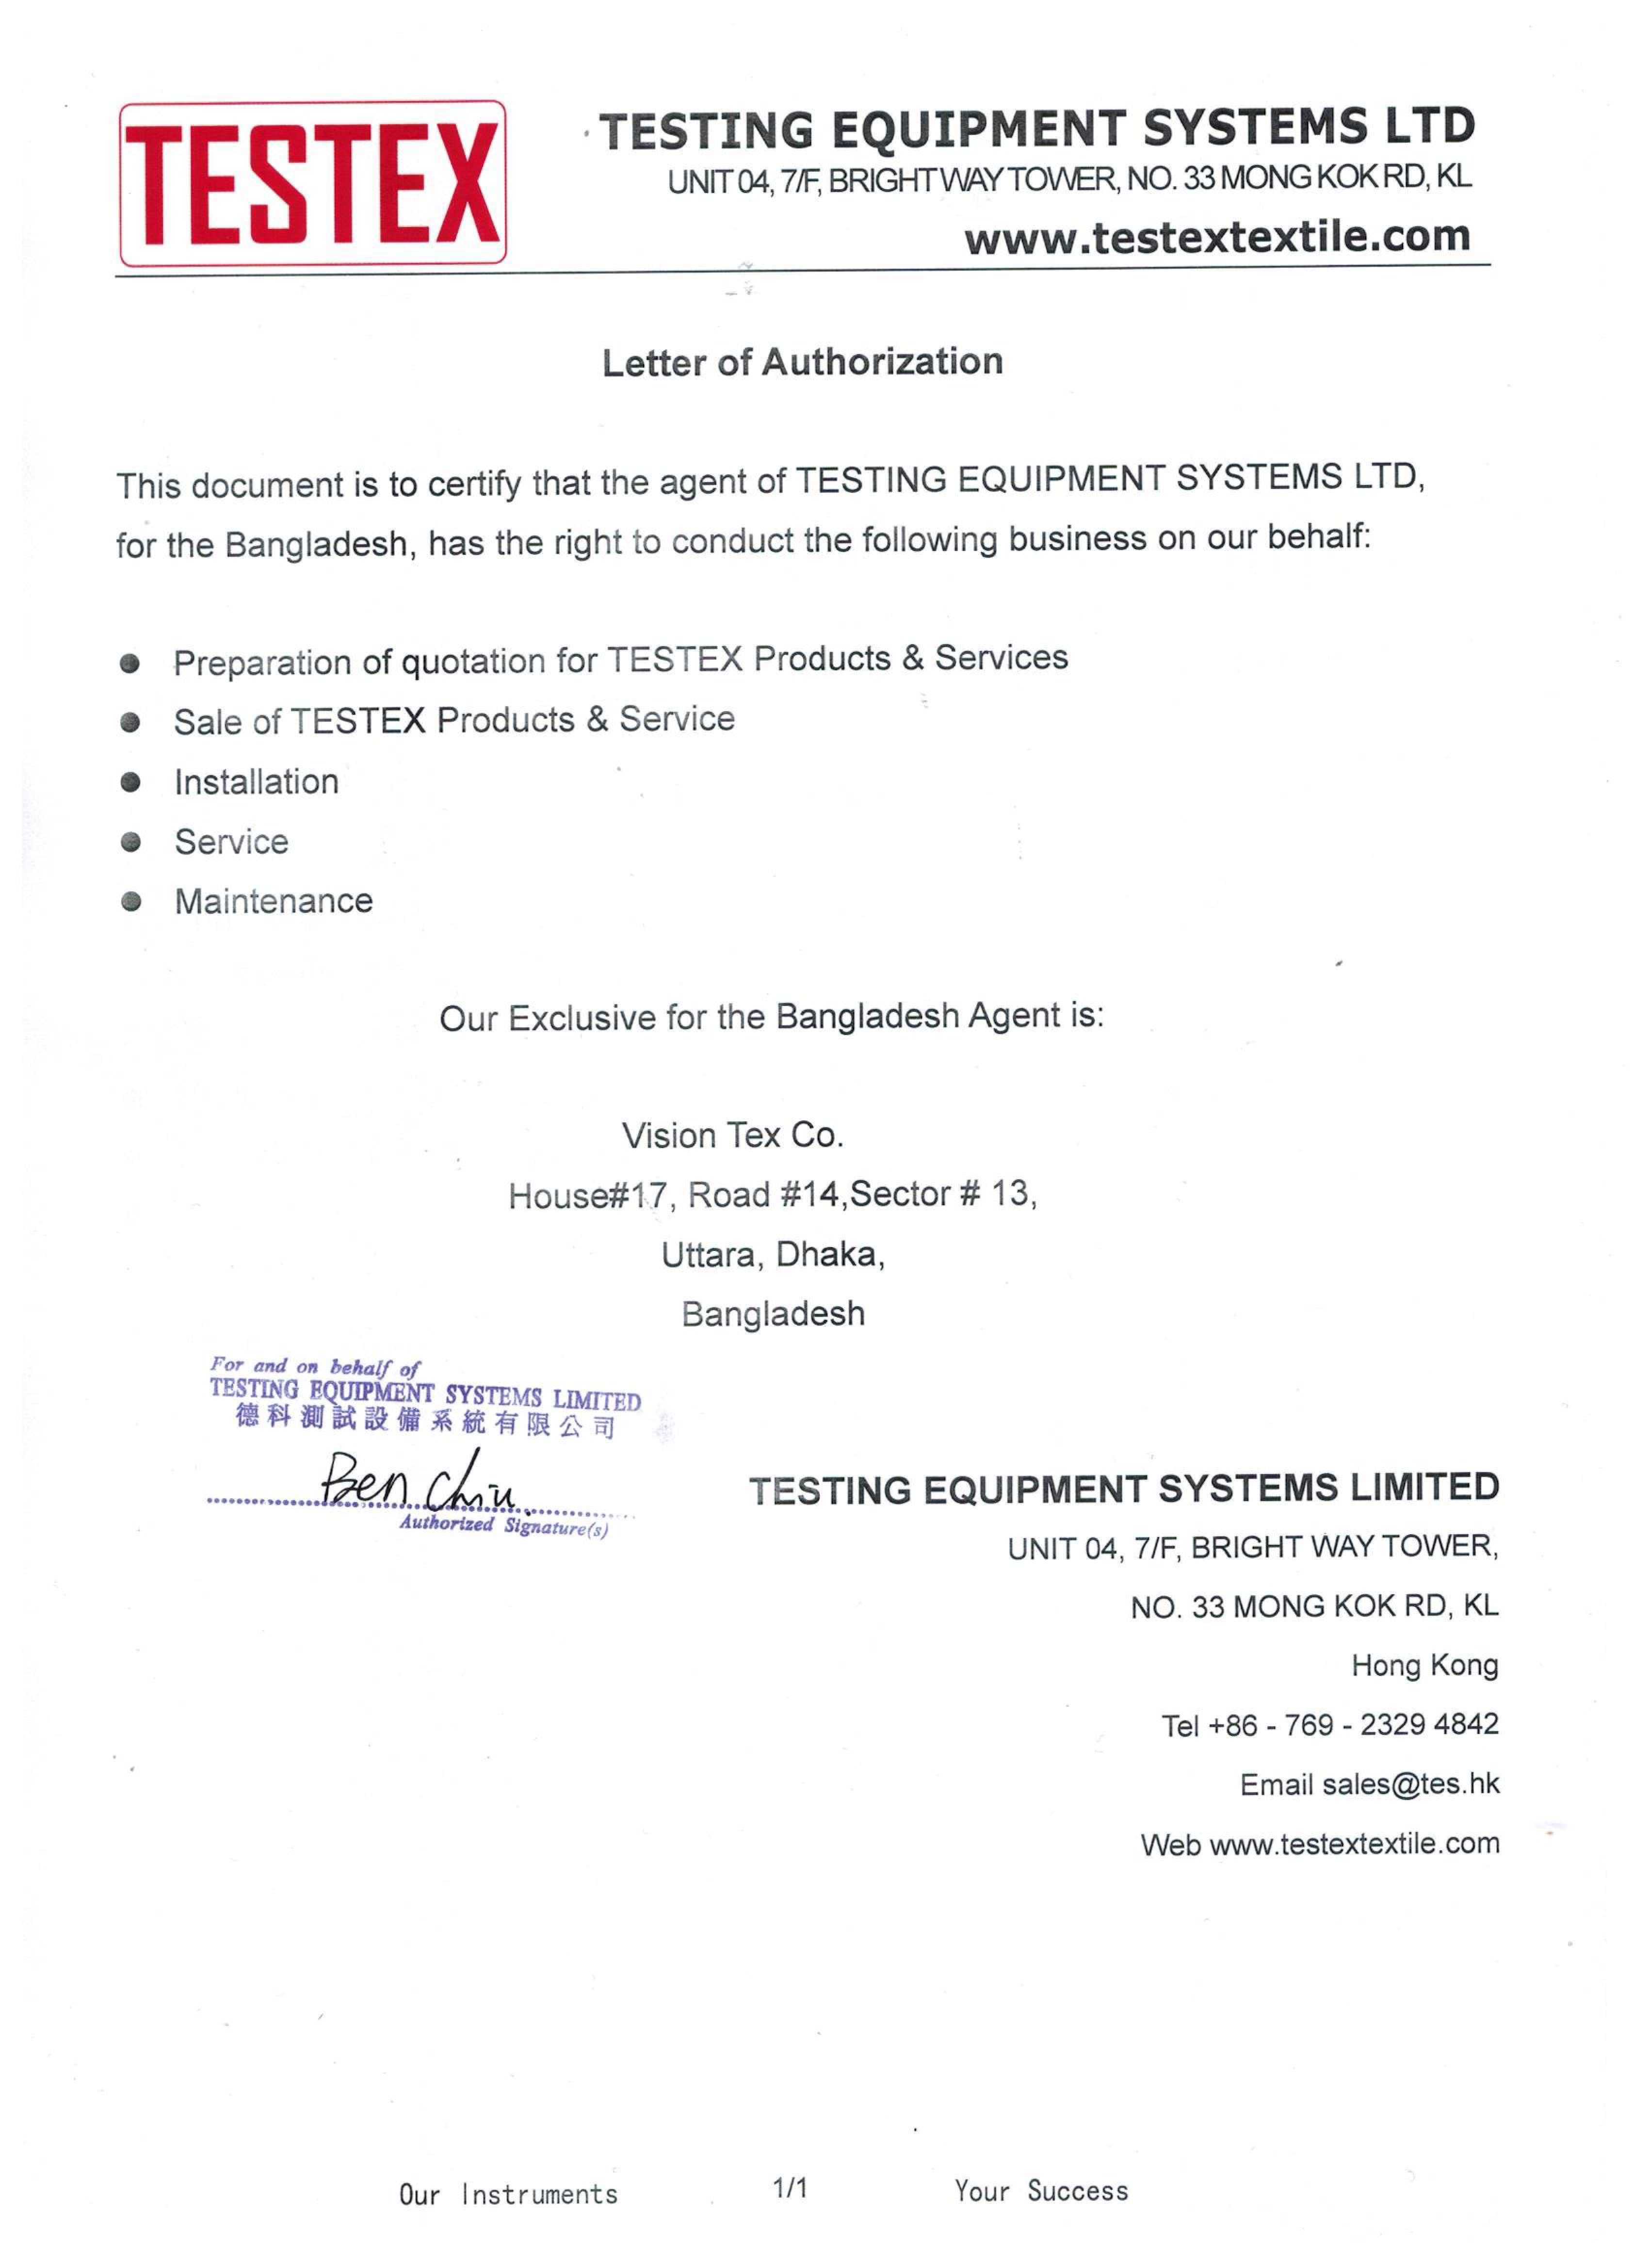 TESTEX Authorization Letter